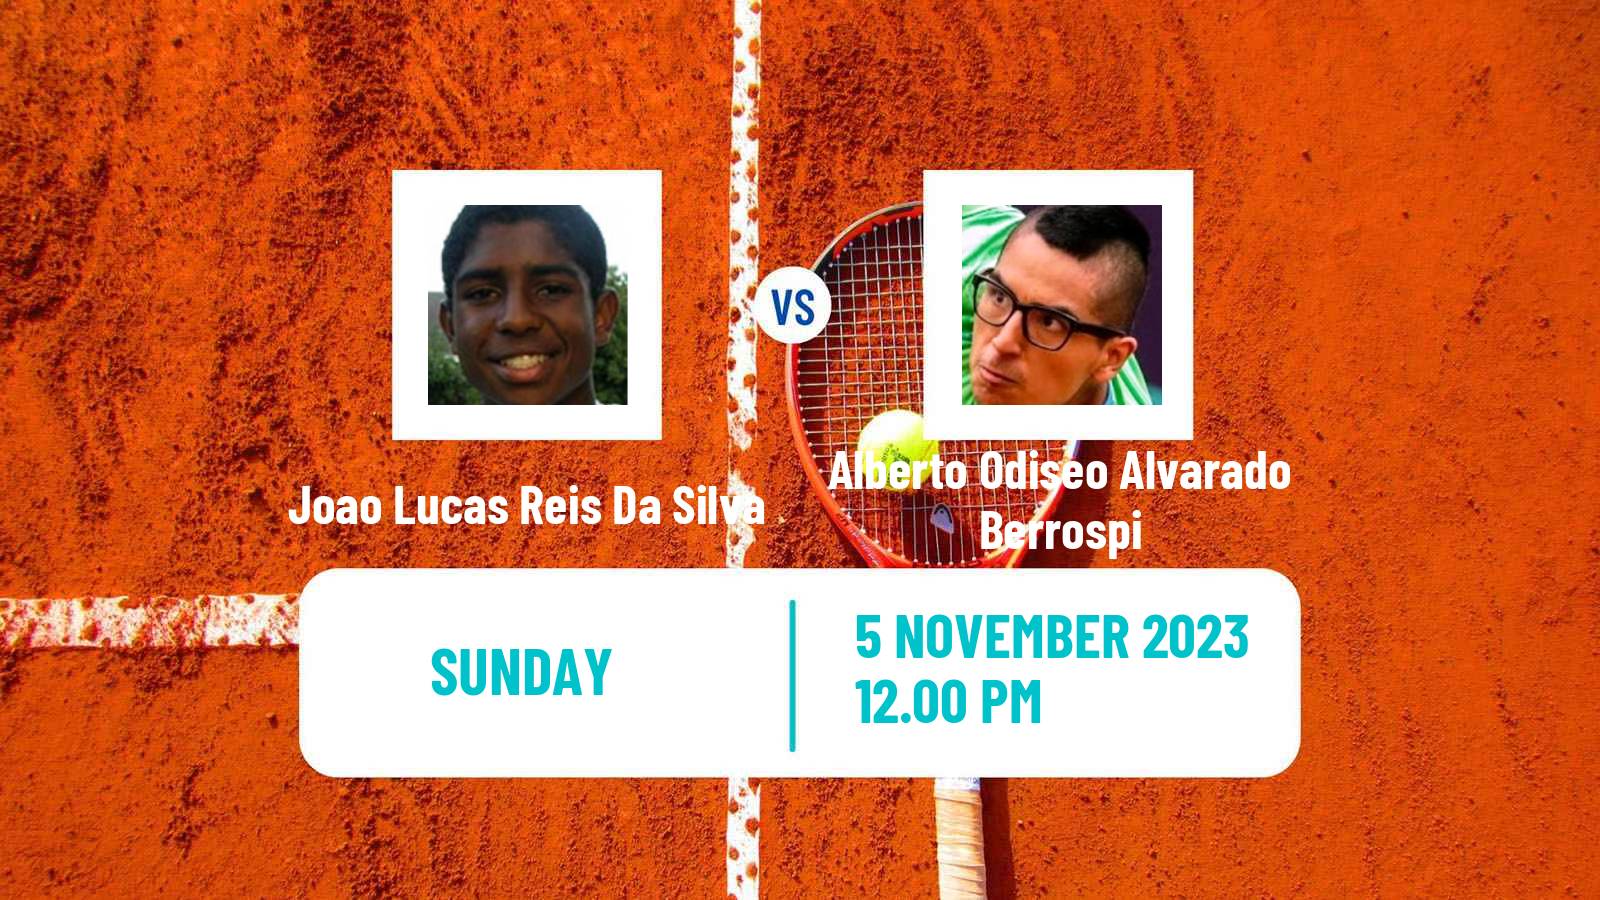 Tennis Lima 2 Challenger Men Joao Lucas Reis Da Silva - Alberto Odiseo Alvarado Berrospi